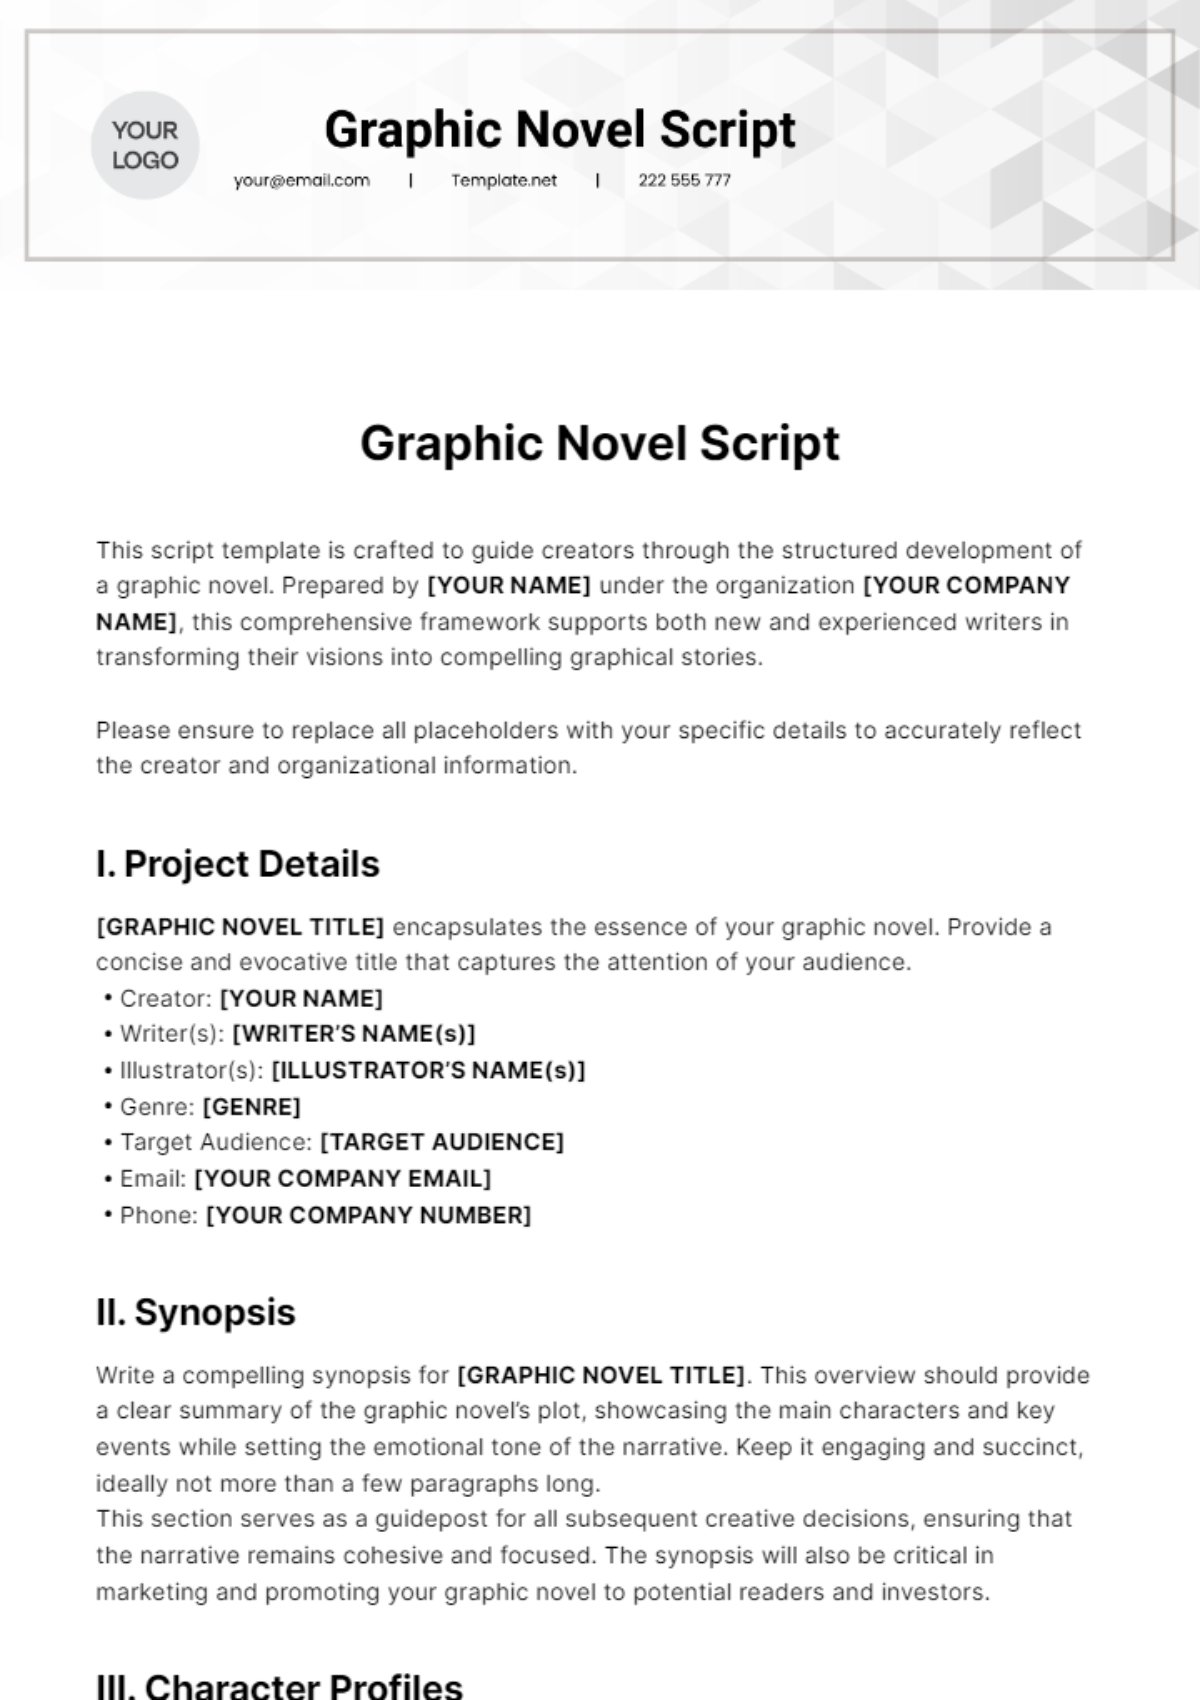 Graphic Novel Script Template